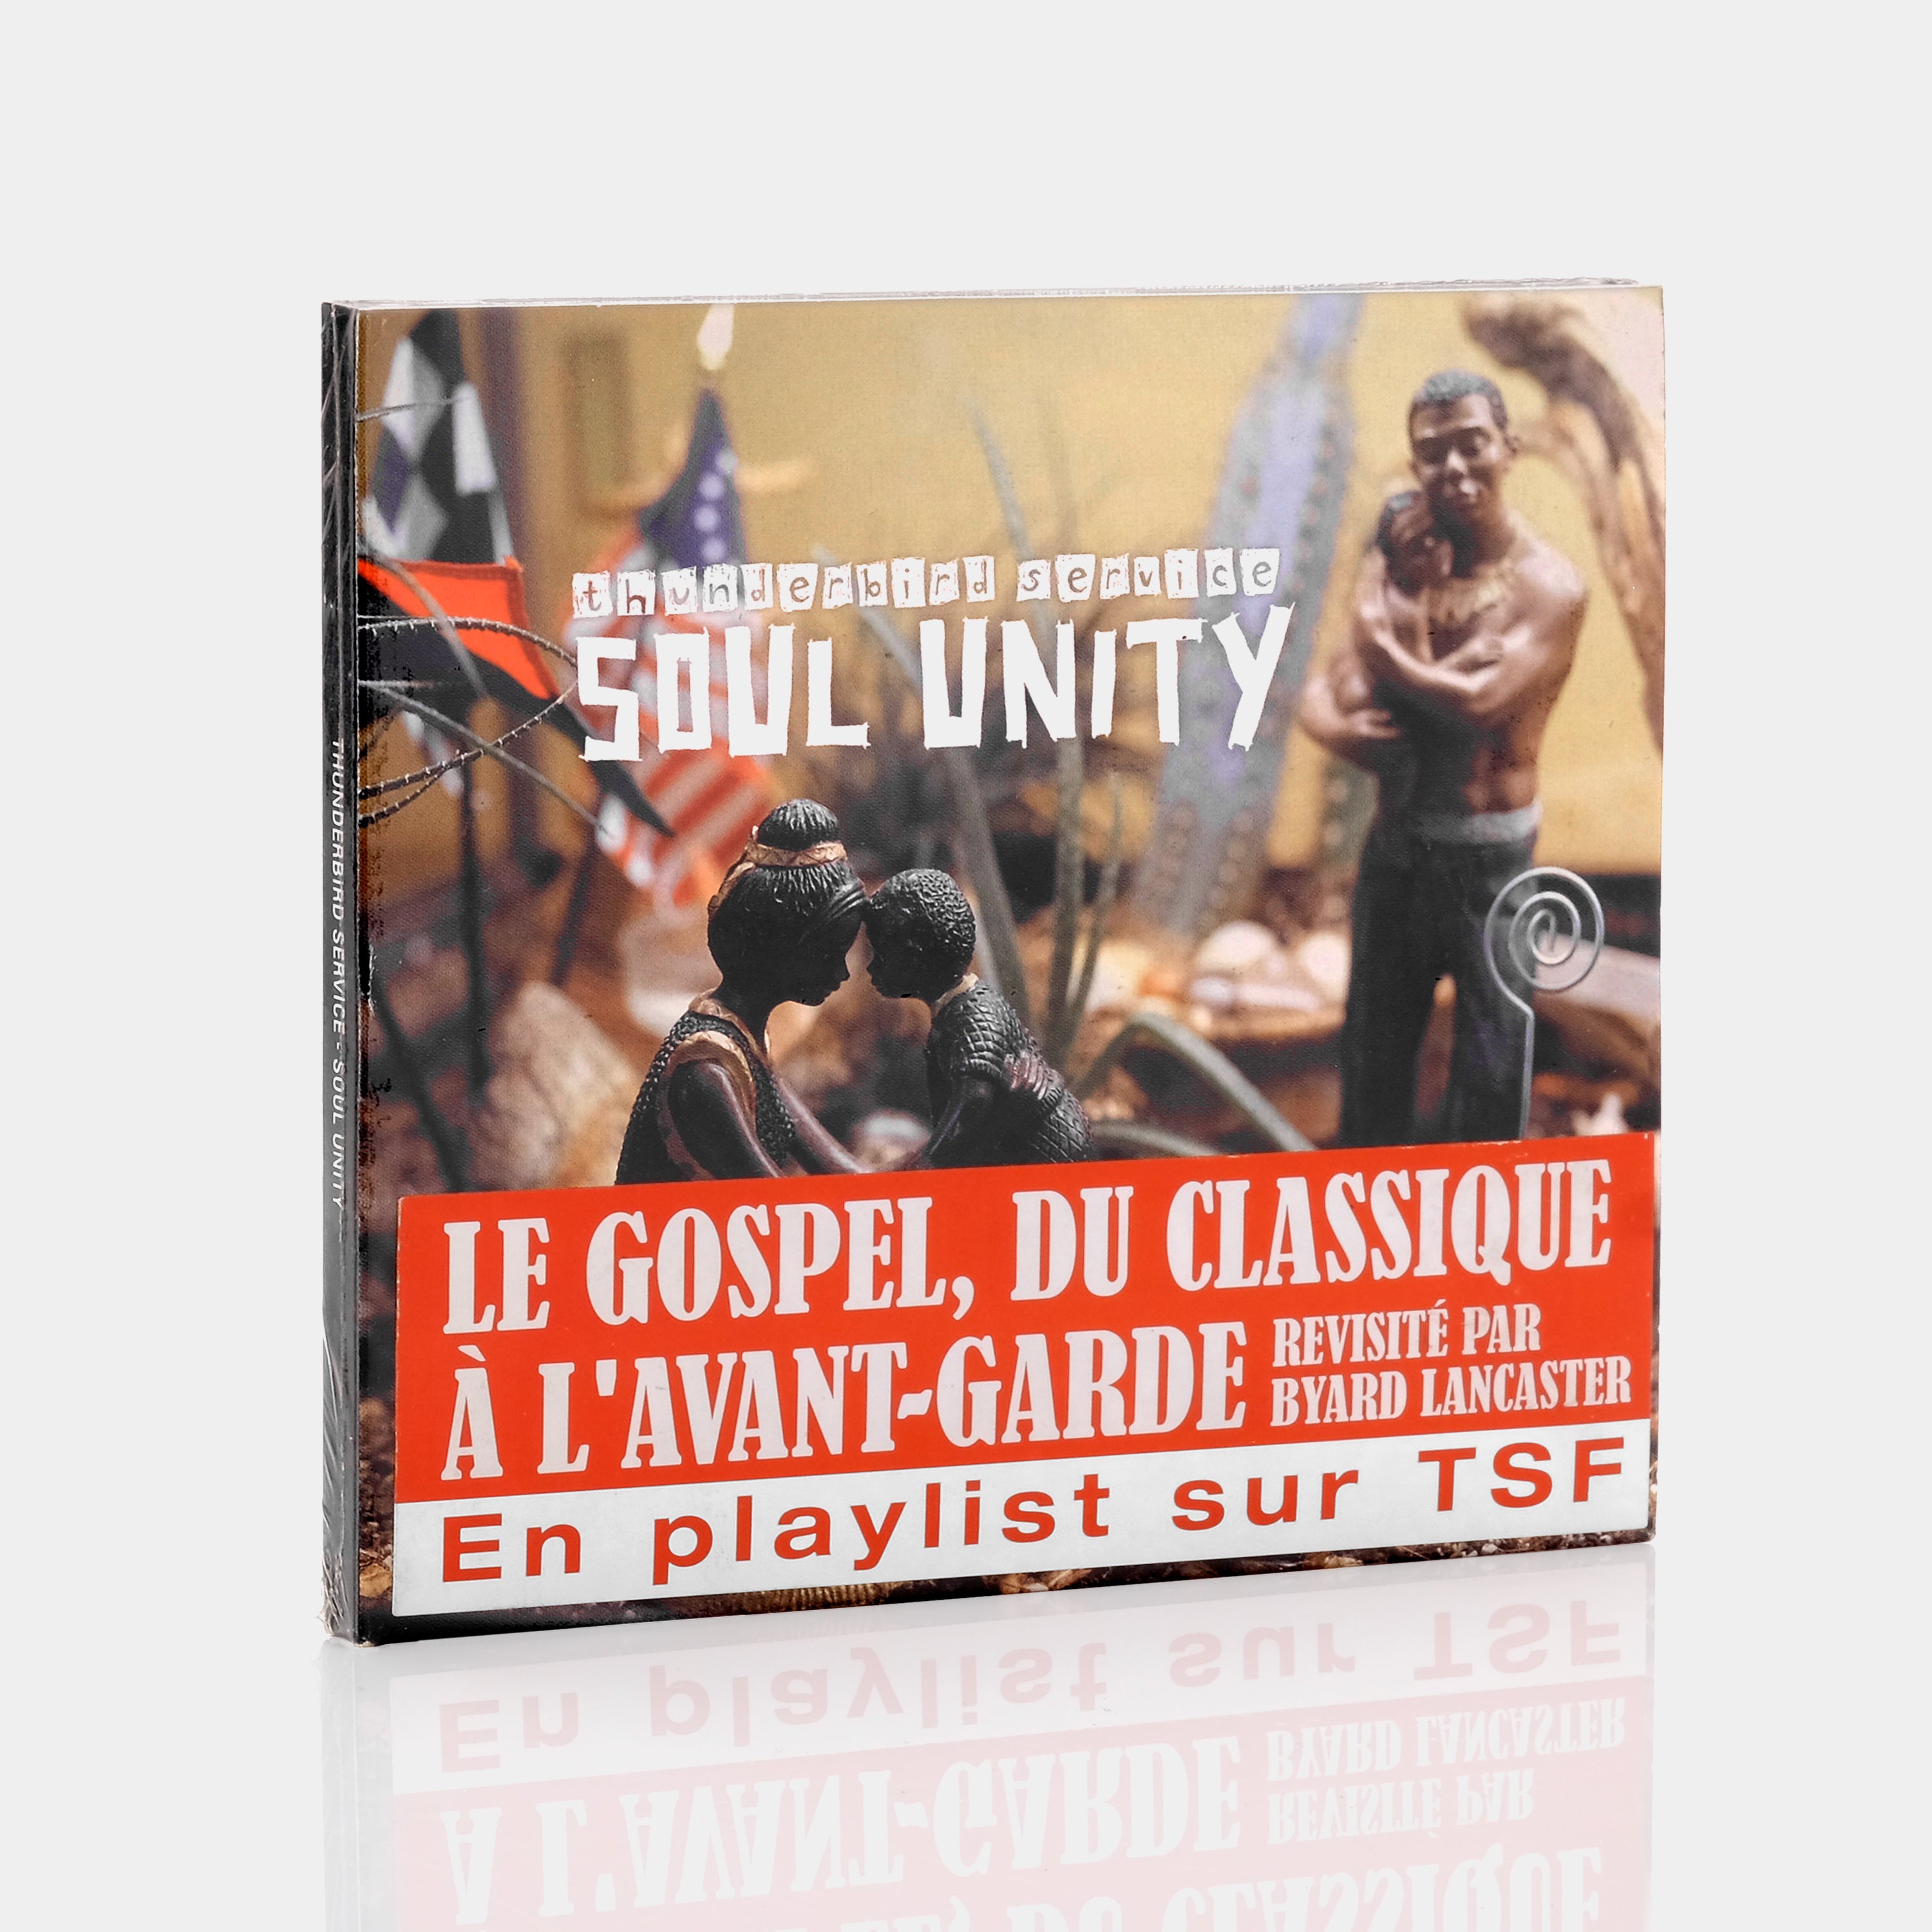 Thunderbird Service - Soul Unity CD